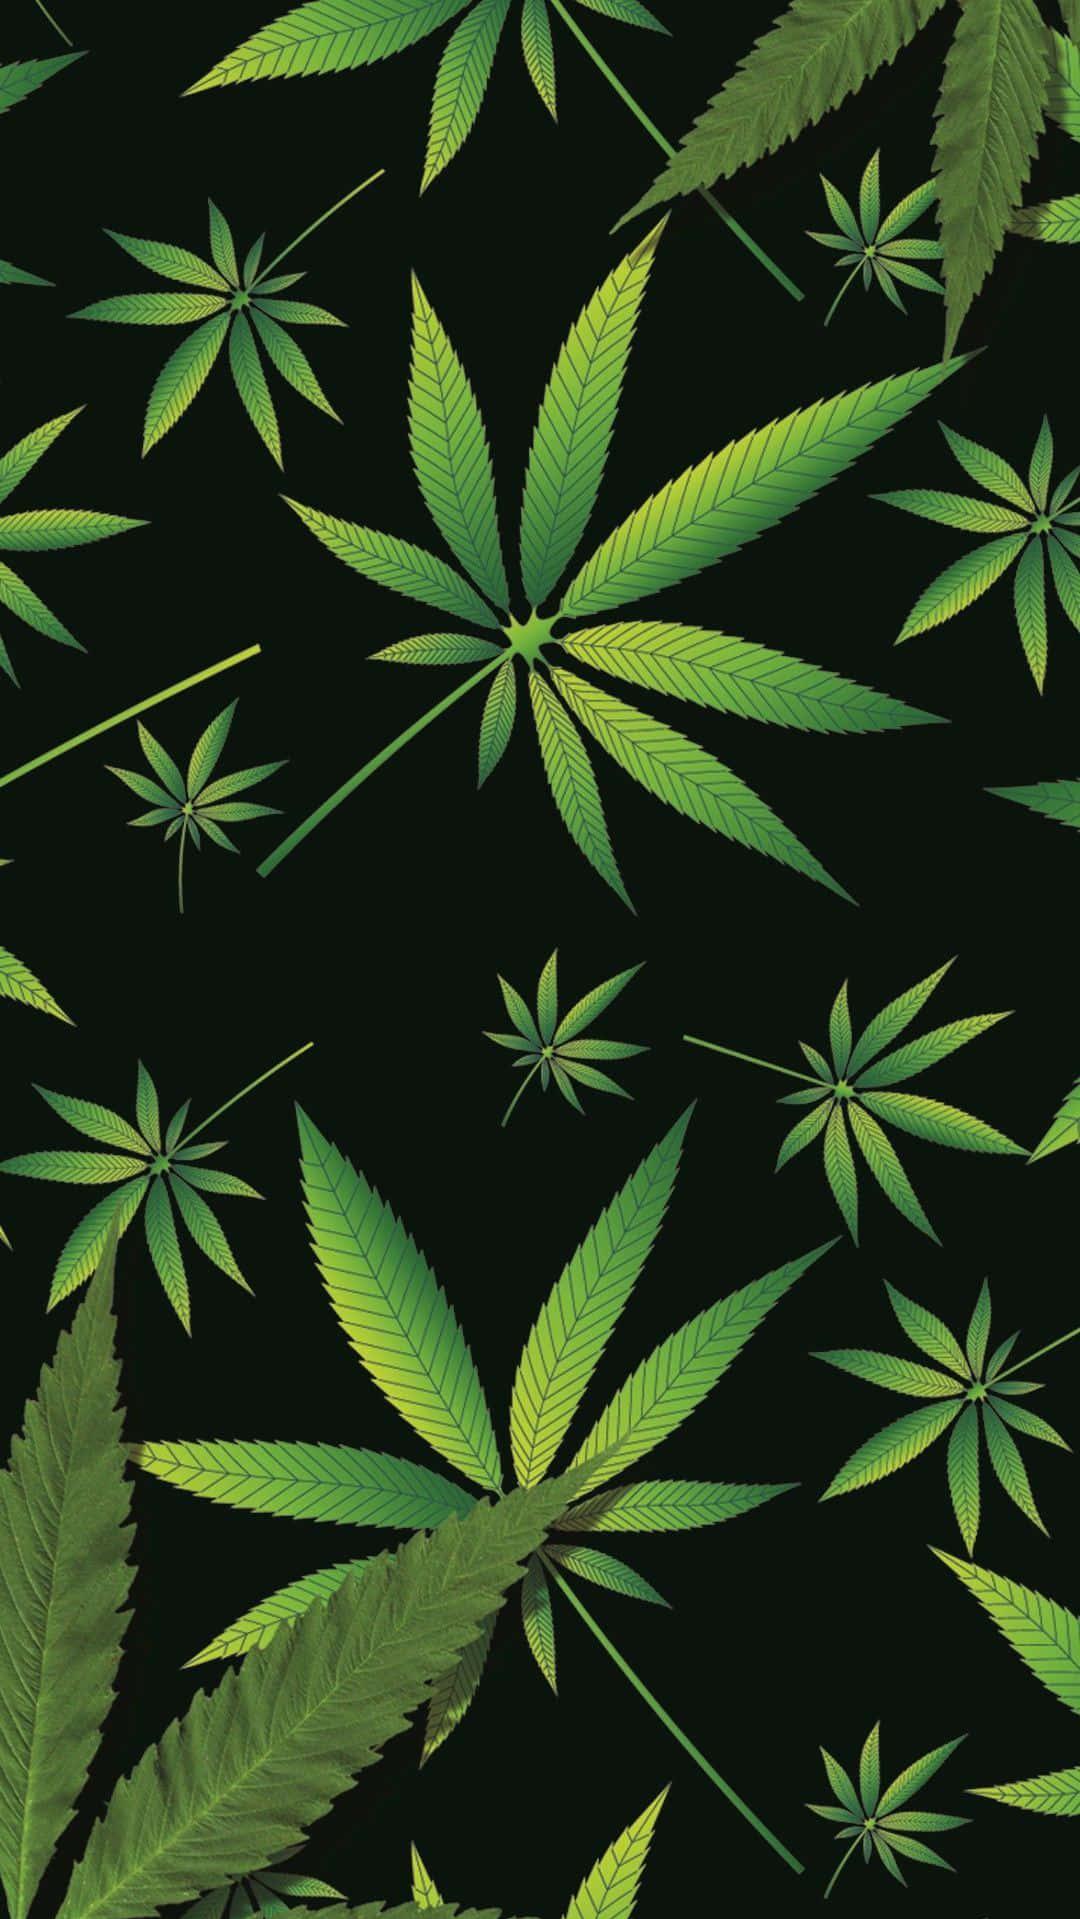 Real Marijuana Leaf On Poster Wallpaper